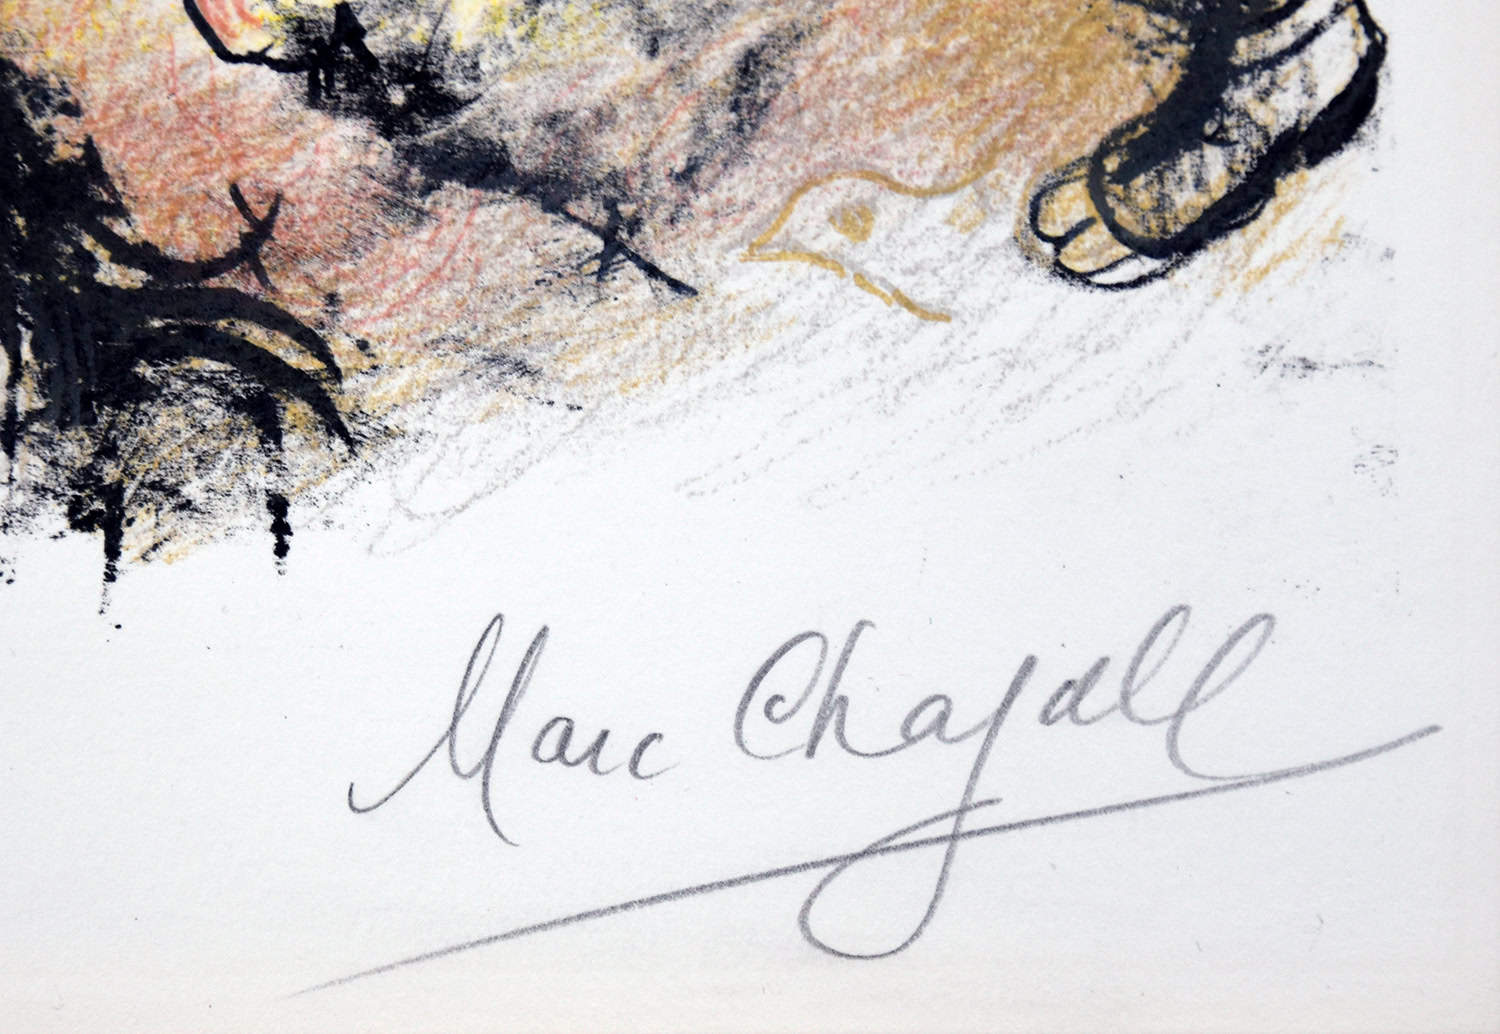 Marc Chagall signature, La Sainte Famille (The Holy Family), 1970